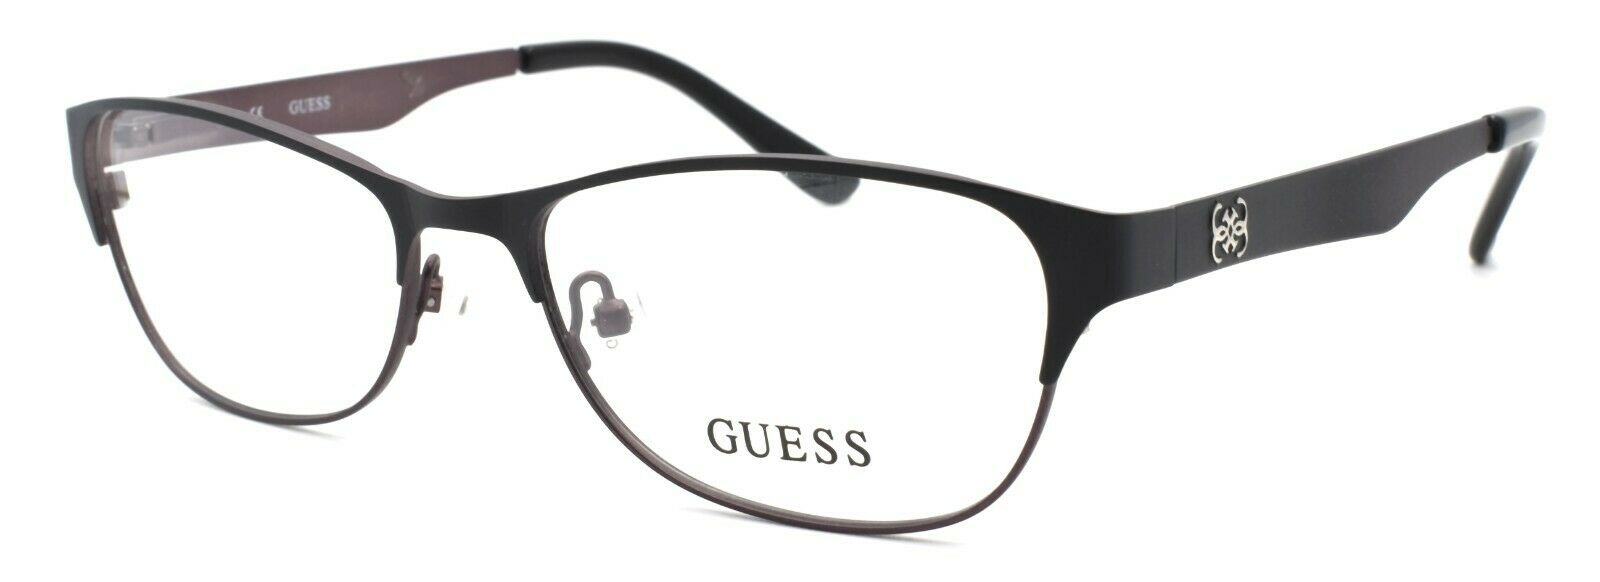 1-GUESS GU2398 BKGUN Women's Eyeglasses Frames 55-16-140 Black / Brown + CASE-715583997394-IKSpecs